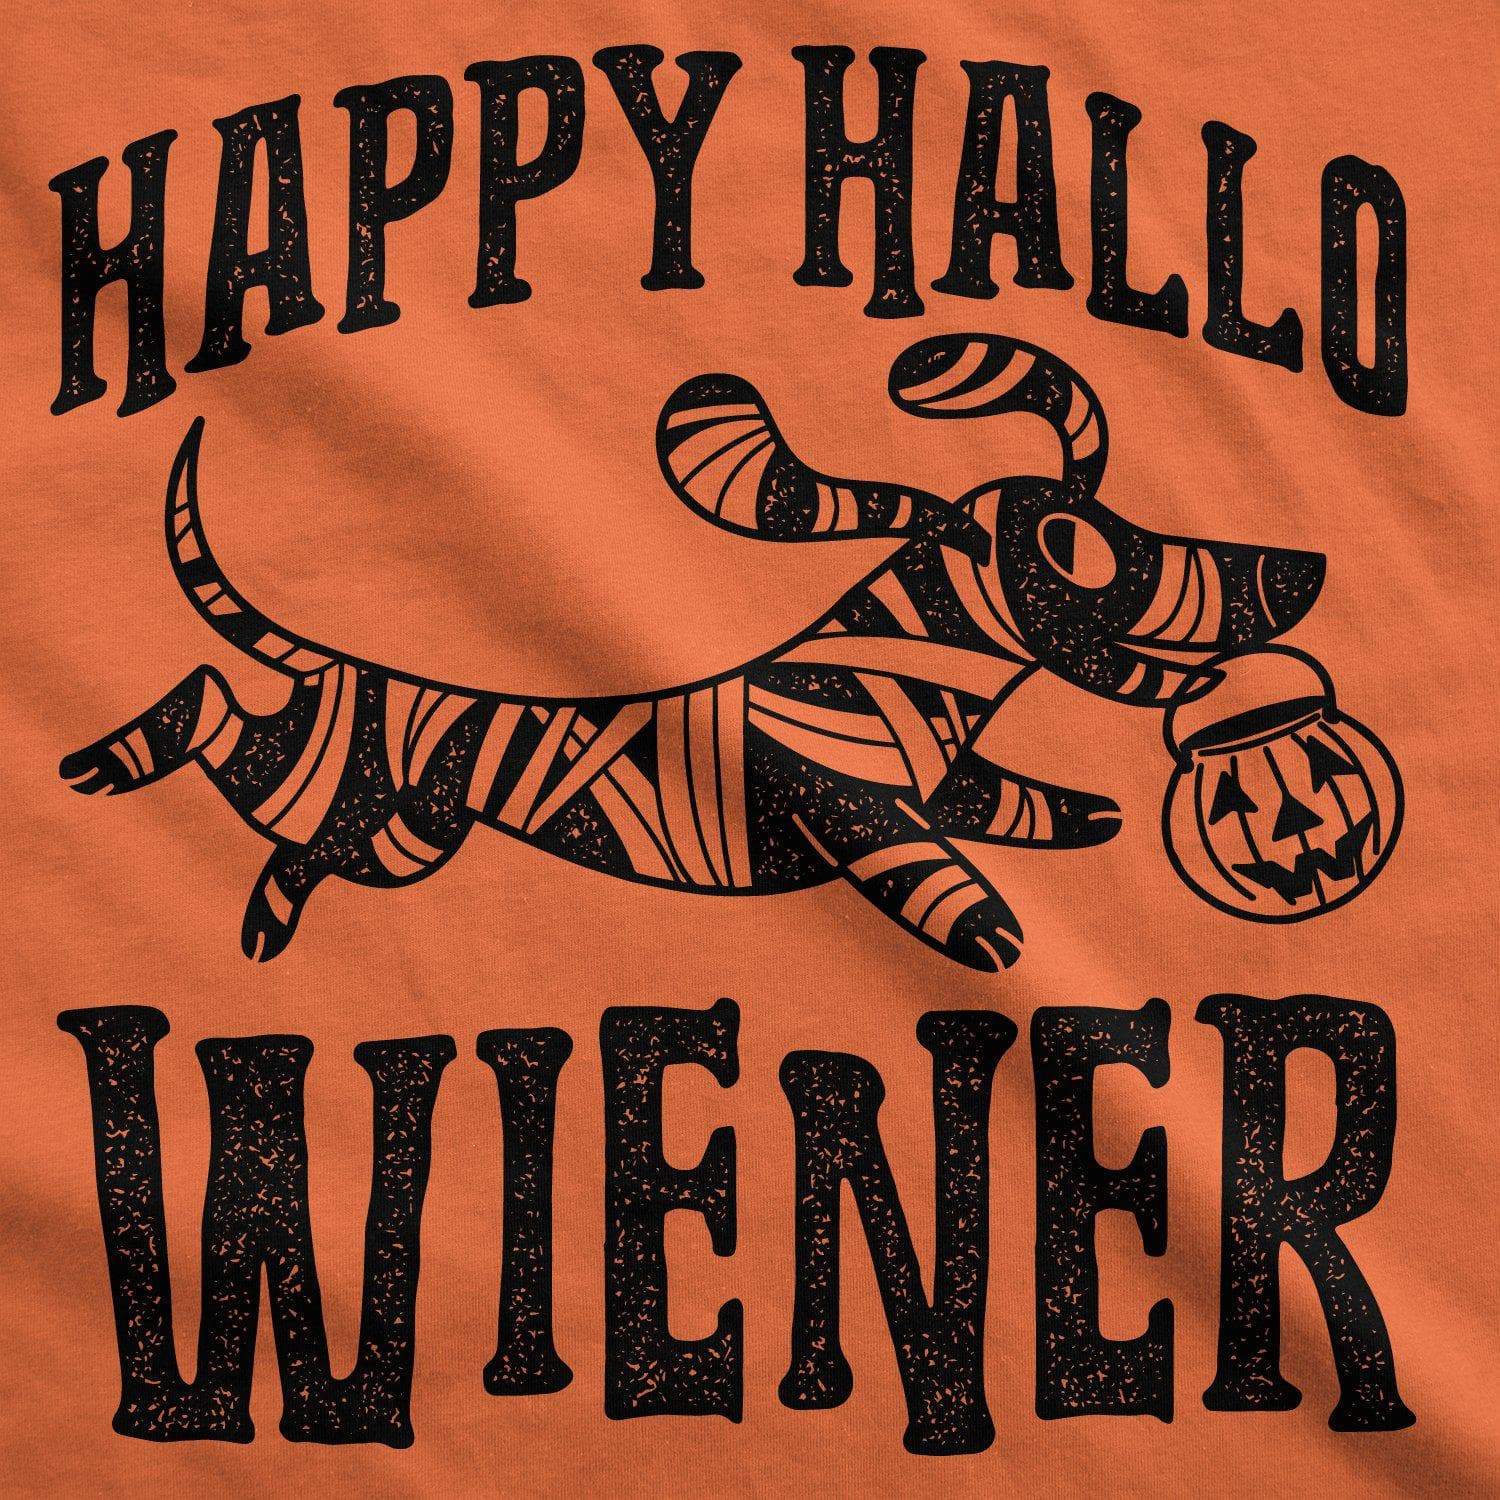 Happy Hallo Wiener Women's Tshirt - Crazy Dog T-Shirts